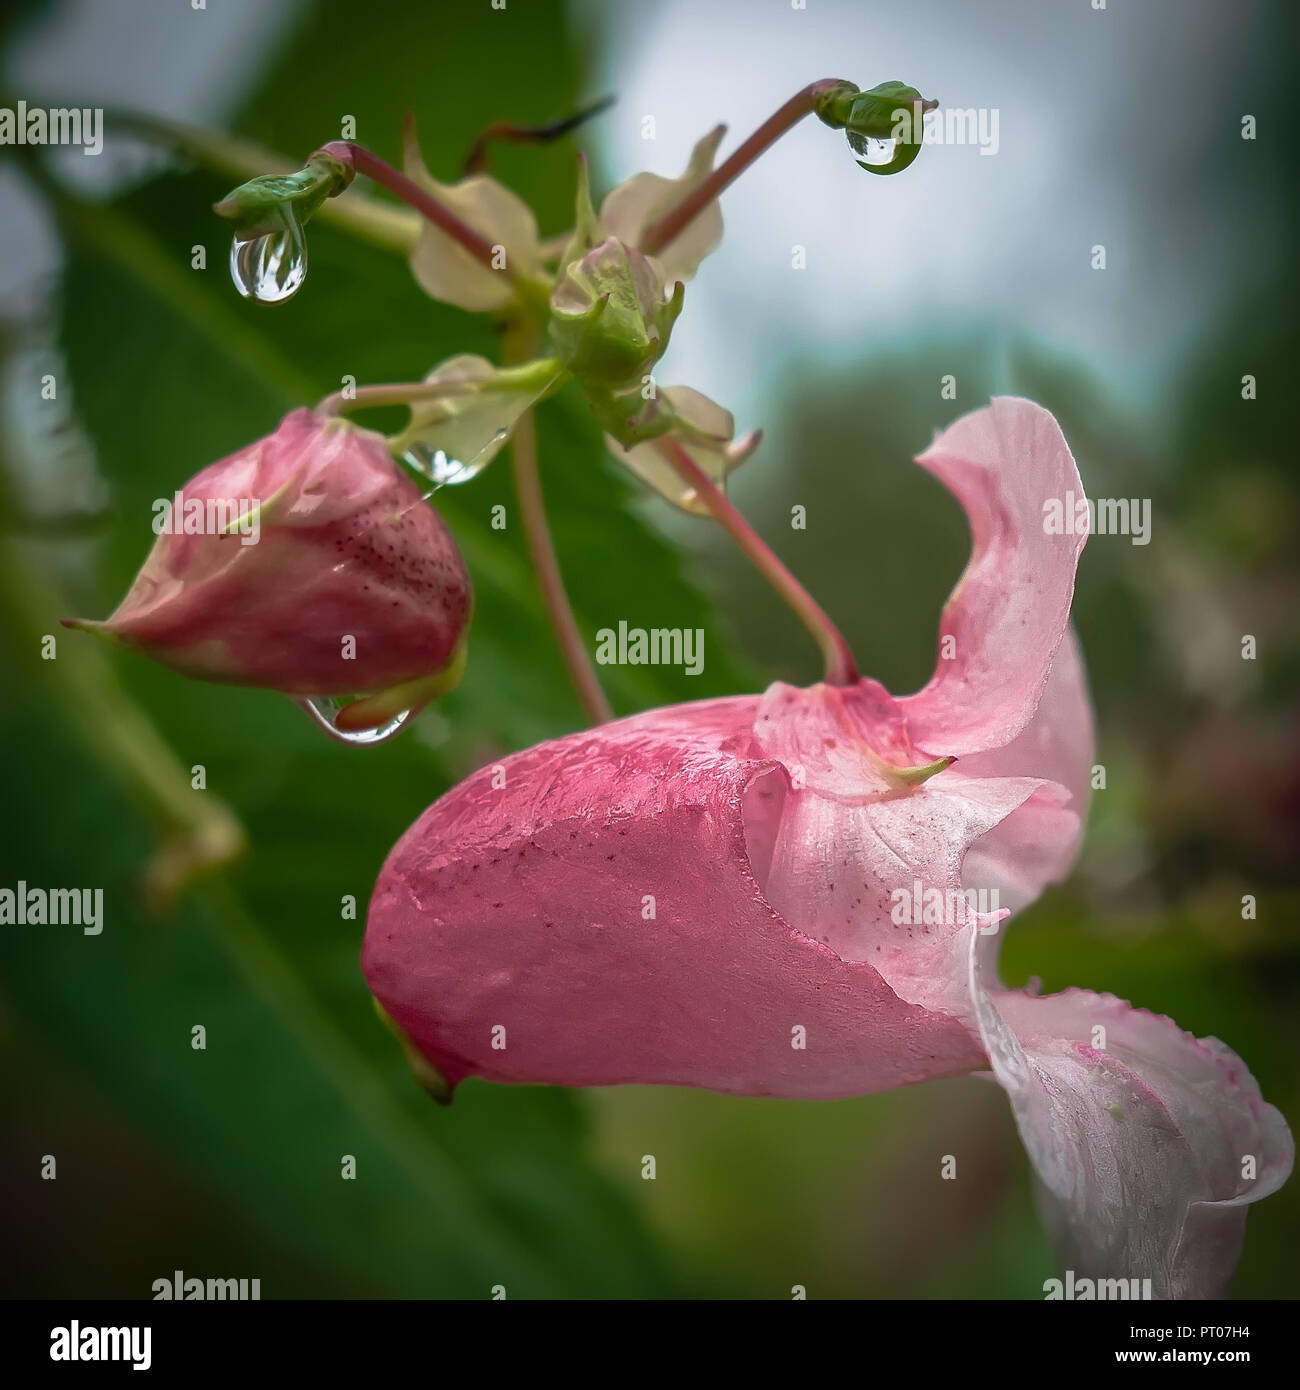 Flowers of impatient after rain Stock Photo